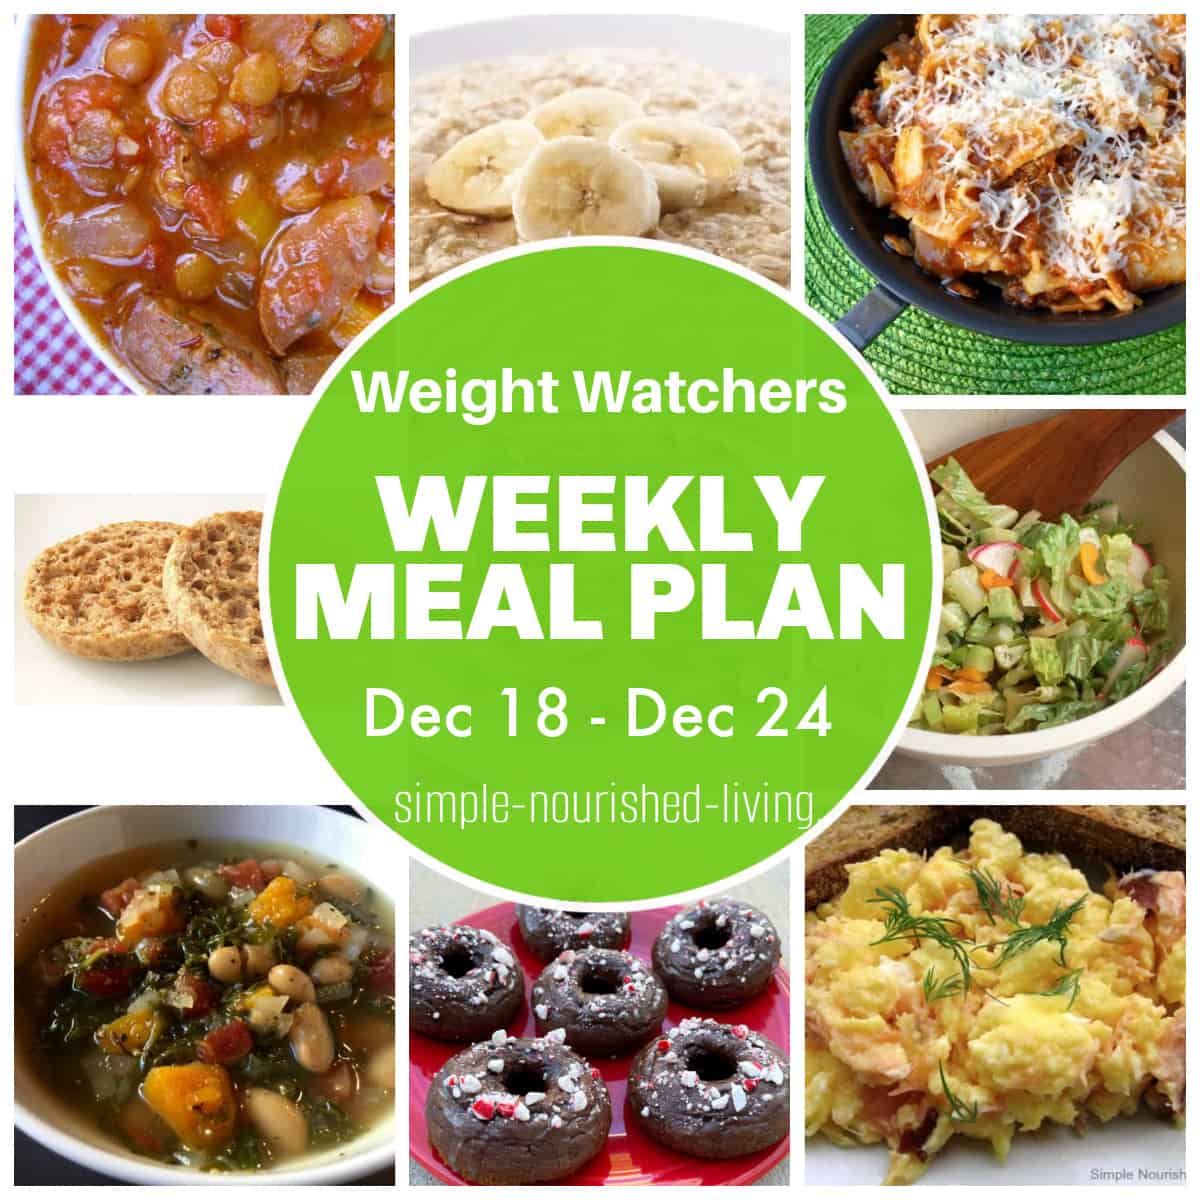 WW Weekly Meal Plan Dec 18